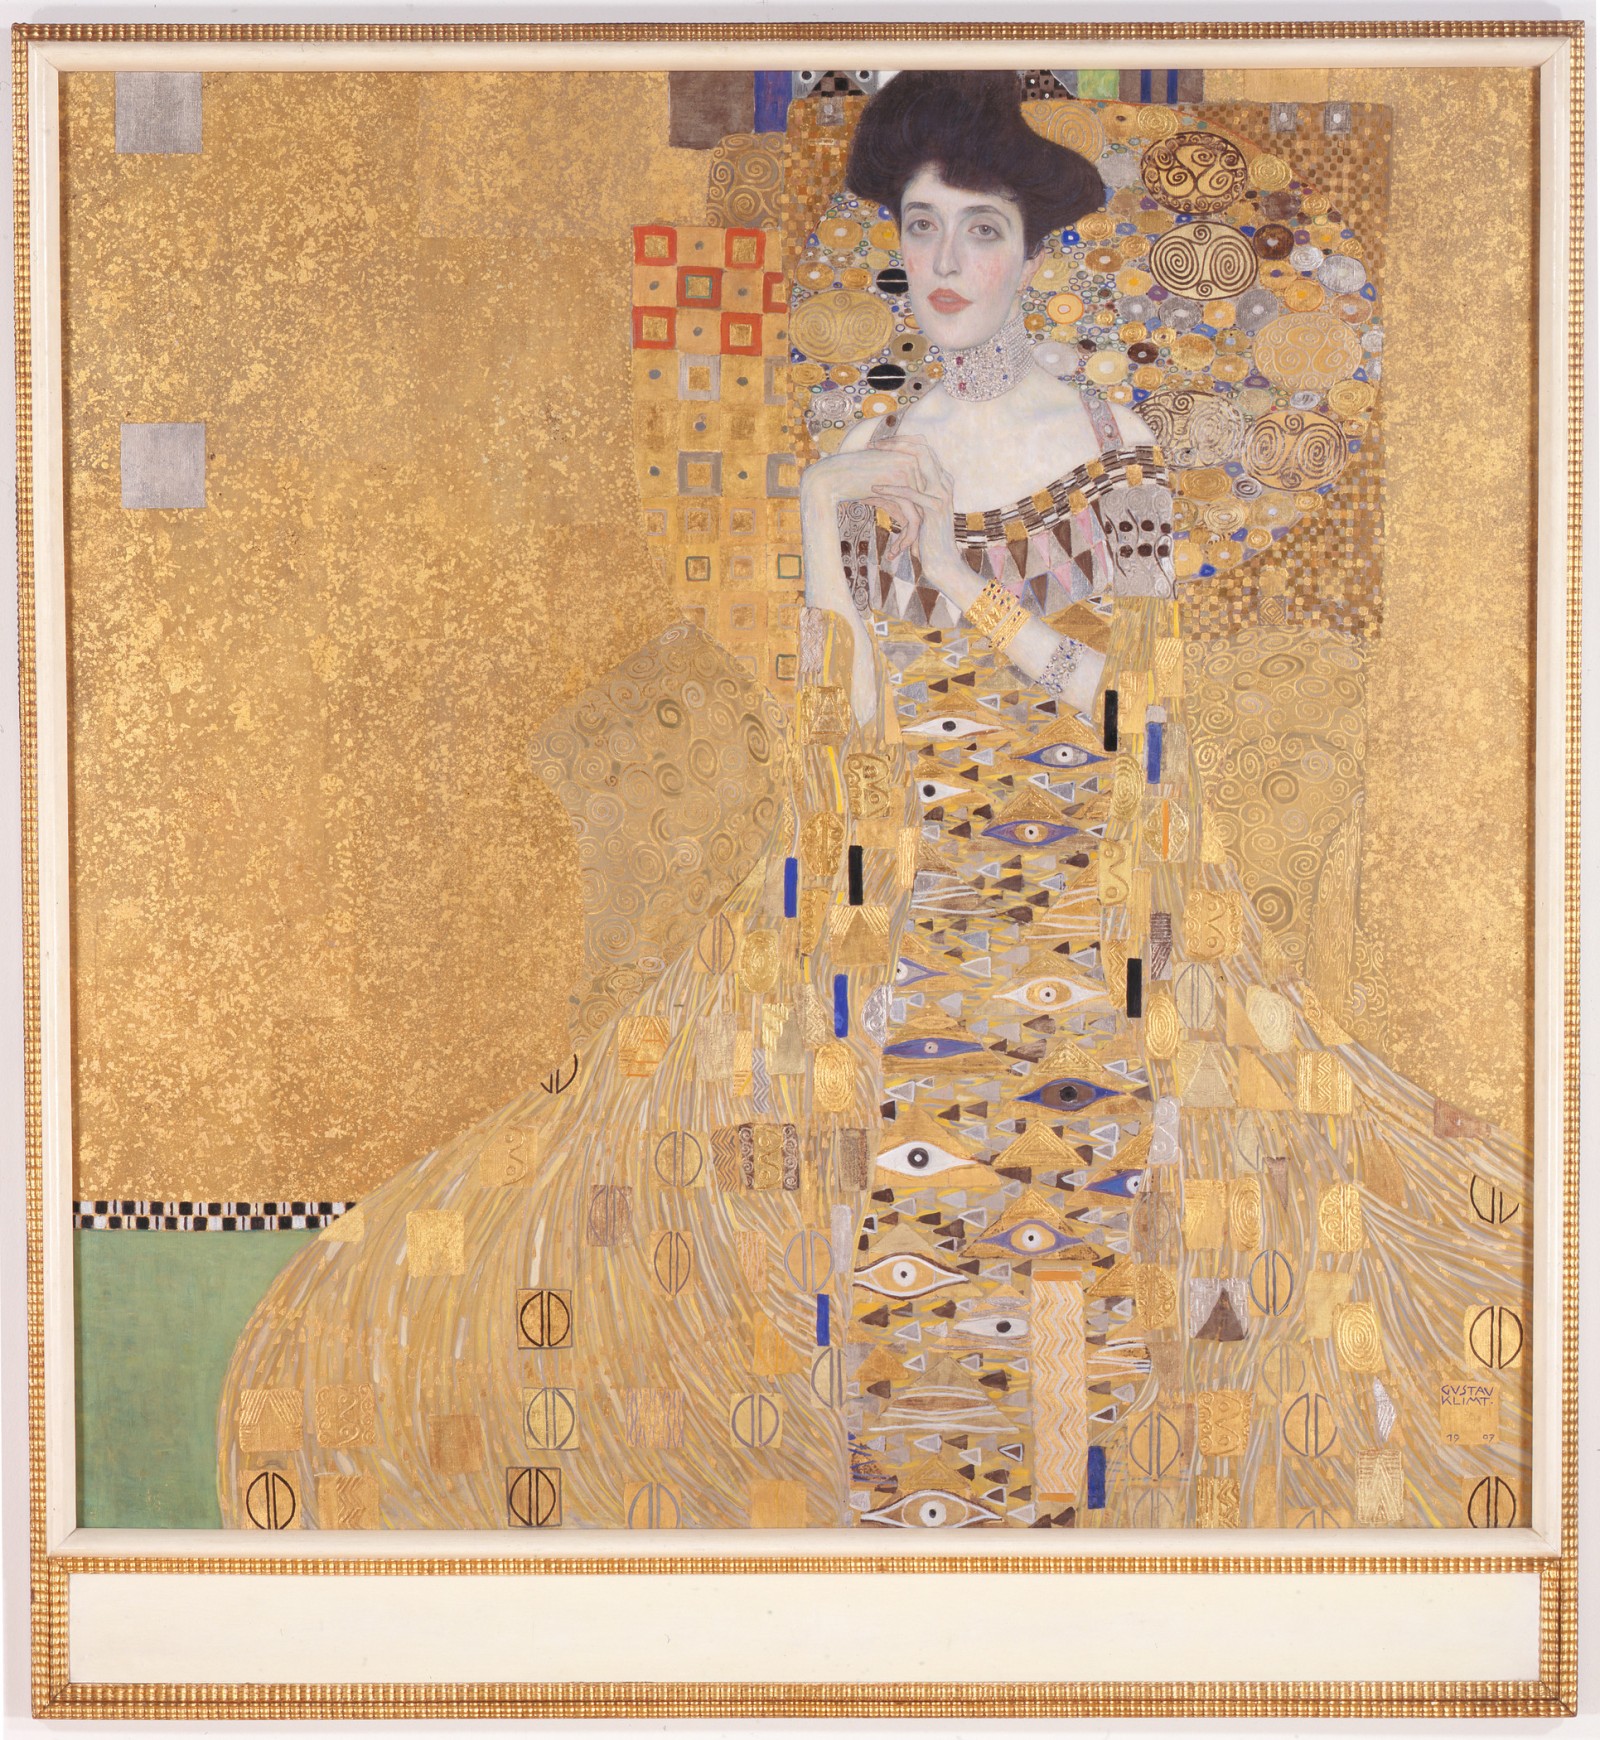   66 – 926 – 75 – 7 Arteum Champán Cristal De Adele Bloch Bauer Gustav Klimt,  